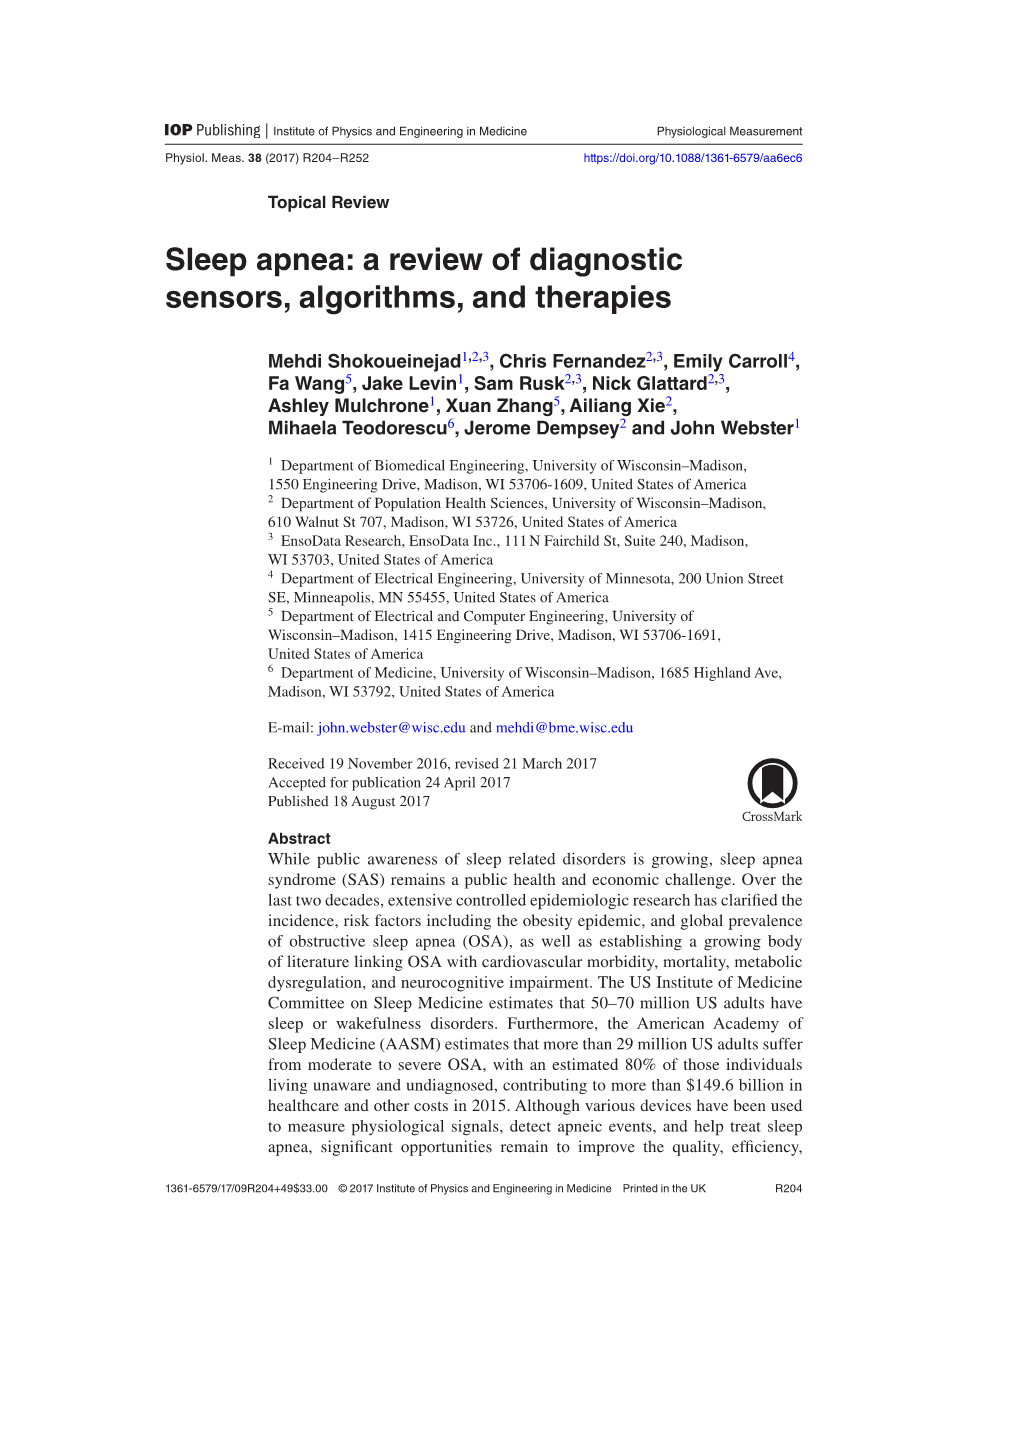 Sleep Apnea: a Review of Diagnostic Sensors, Algorithms, and Therapies PMEAE3